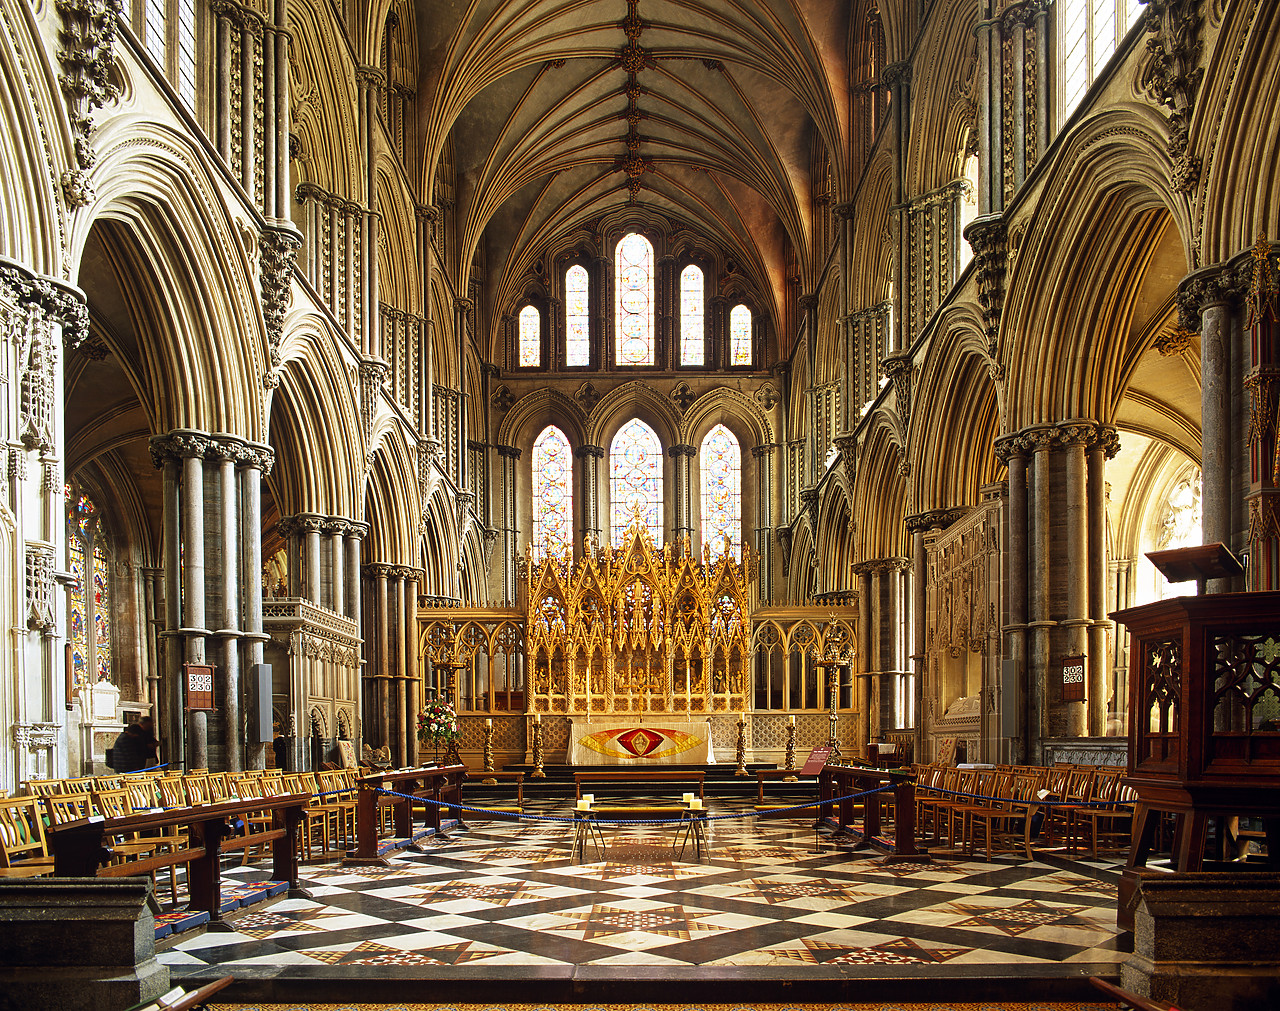 #010770-2 - Ely Cathedral Interior, Ely, Cambridgeshire, England